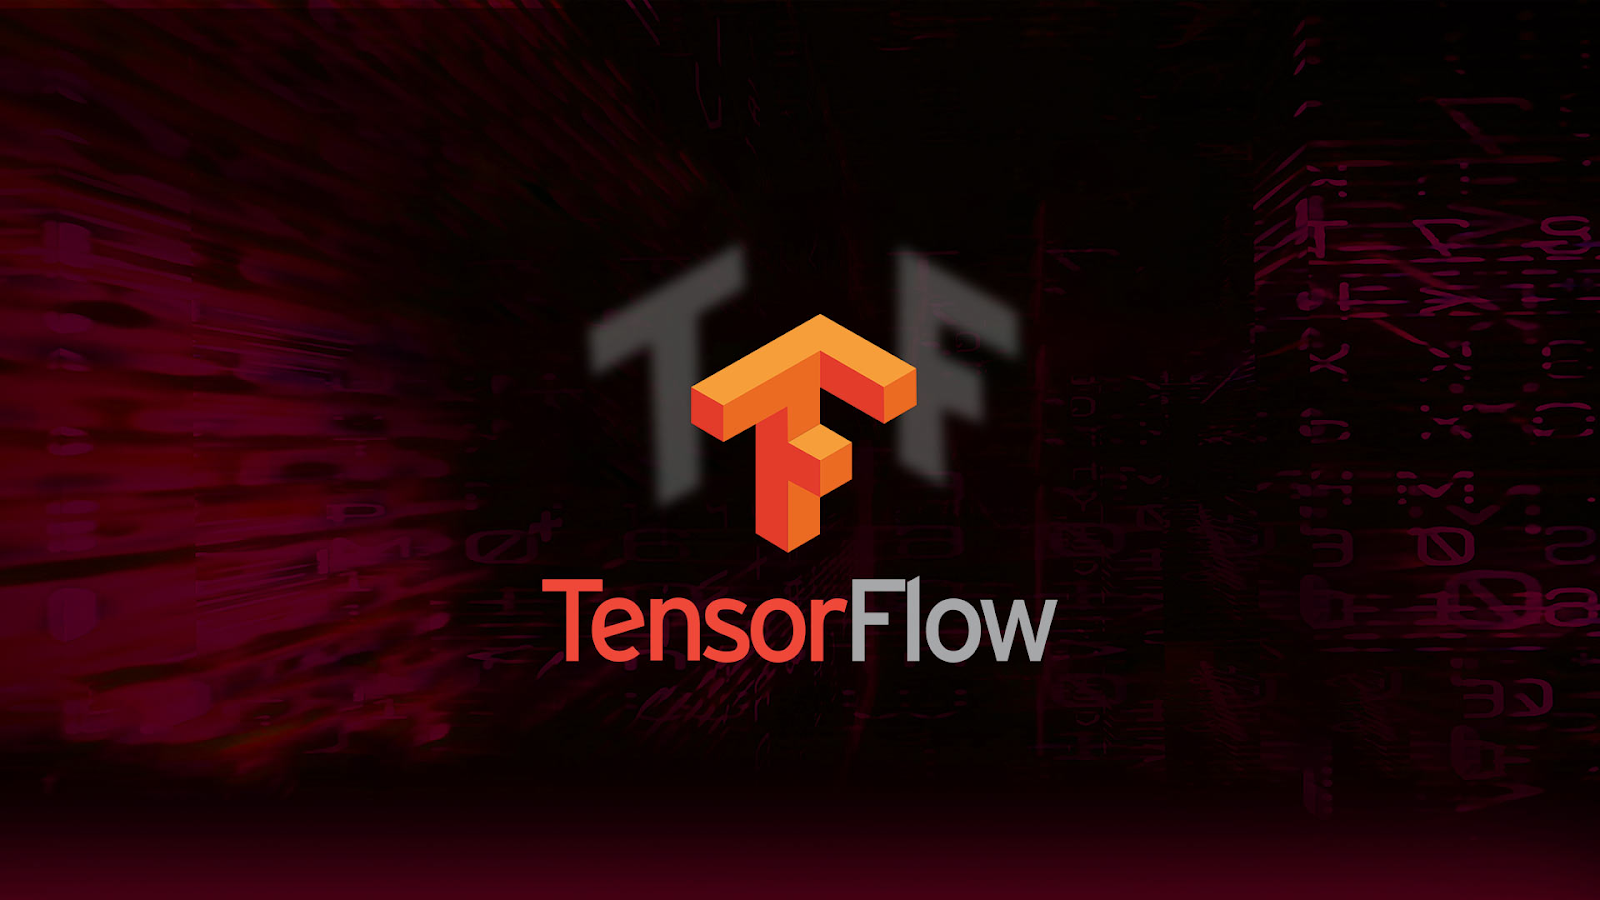 tensorflow artificial intelligence tool